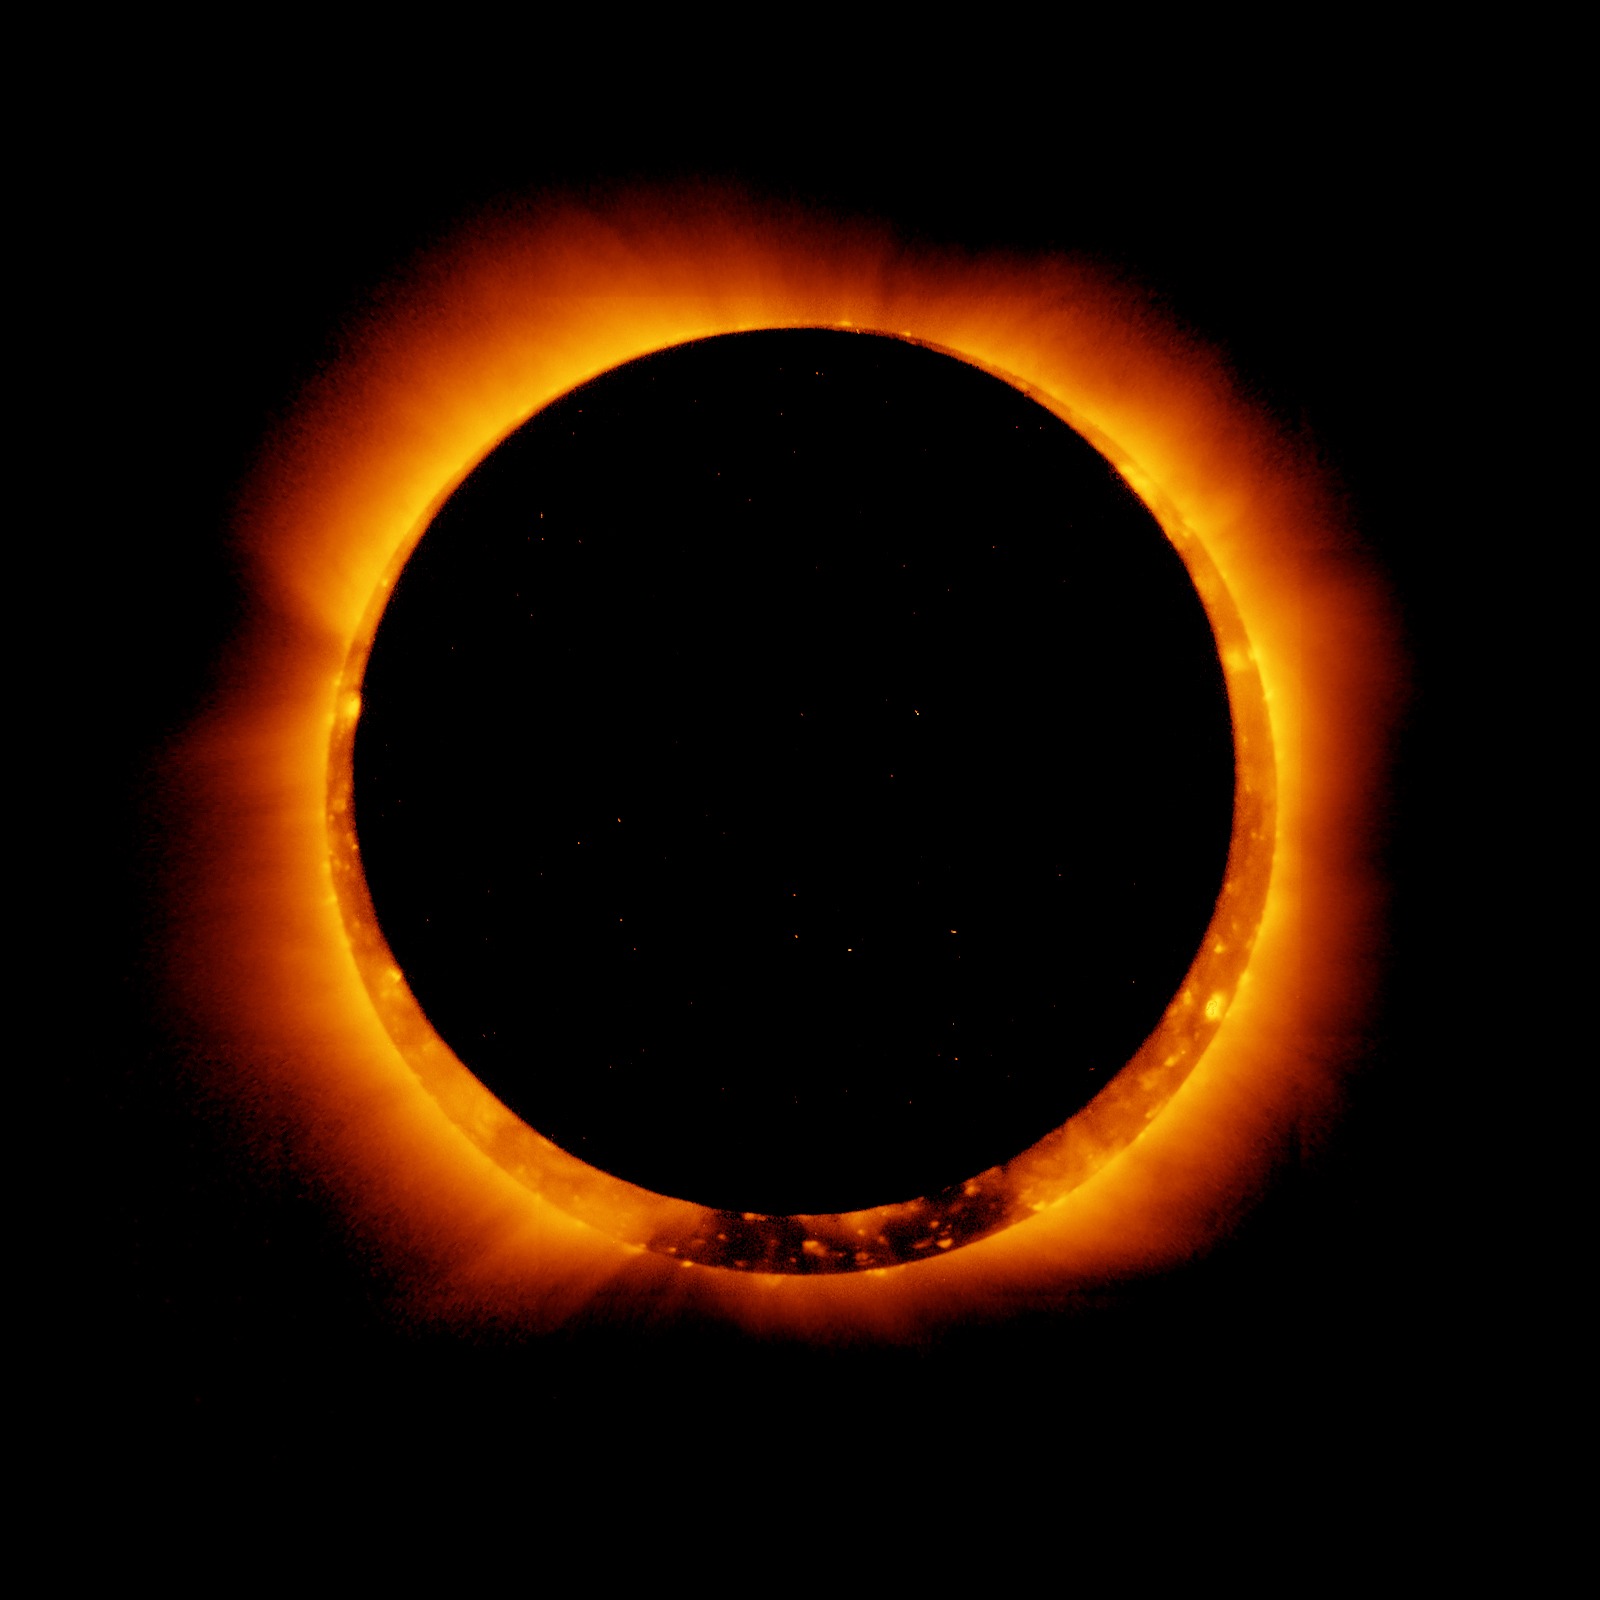 Hinode_Observes_Annular_Solar_Eclipse,_4_Jan_2011